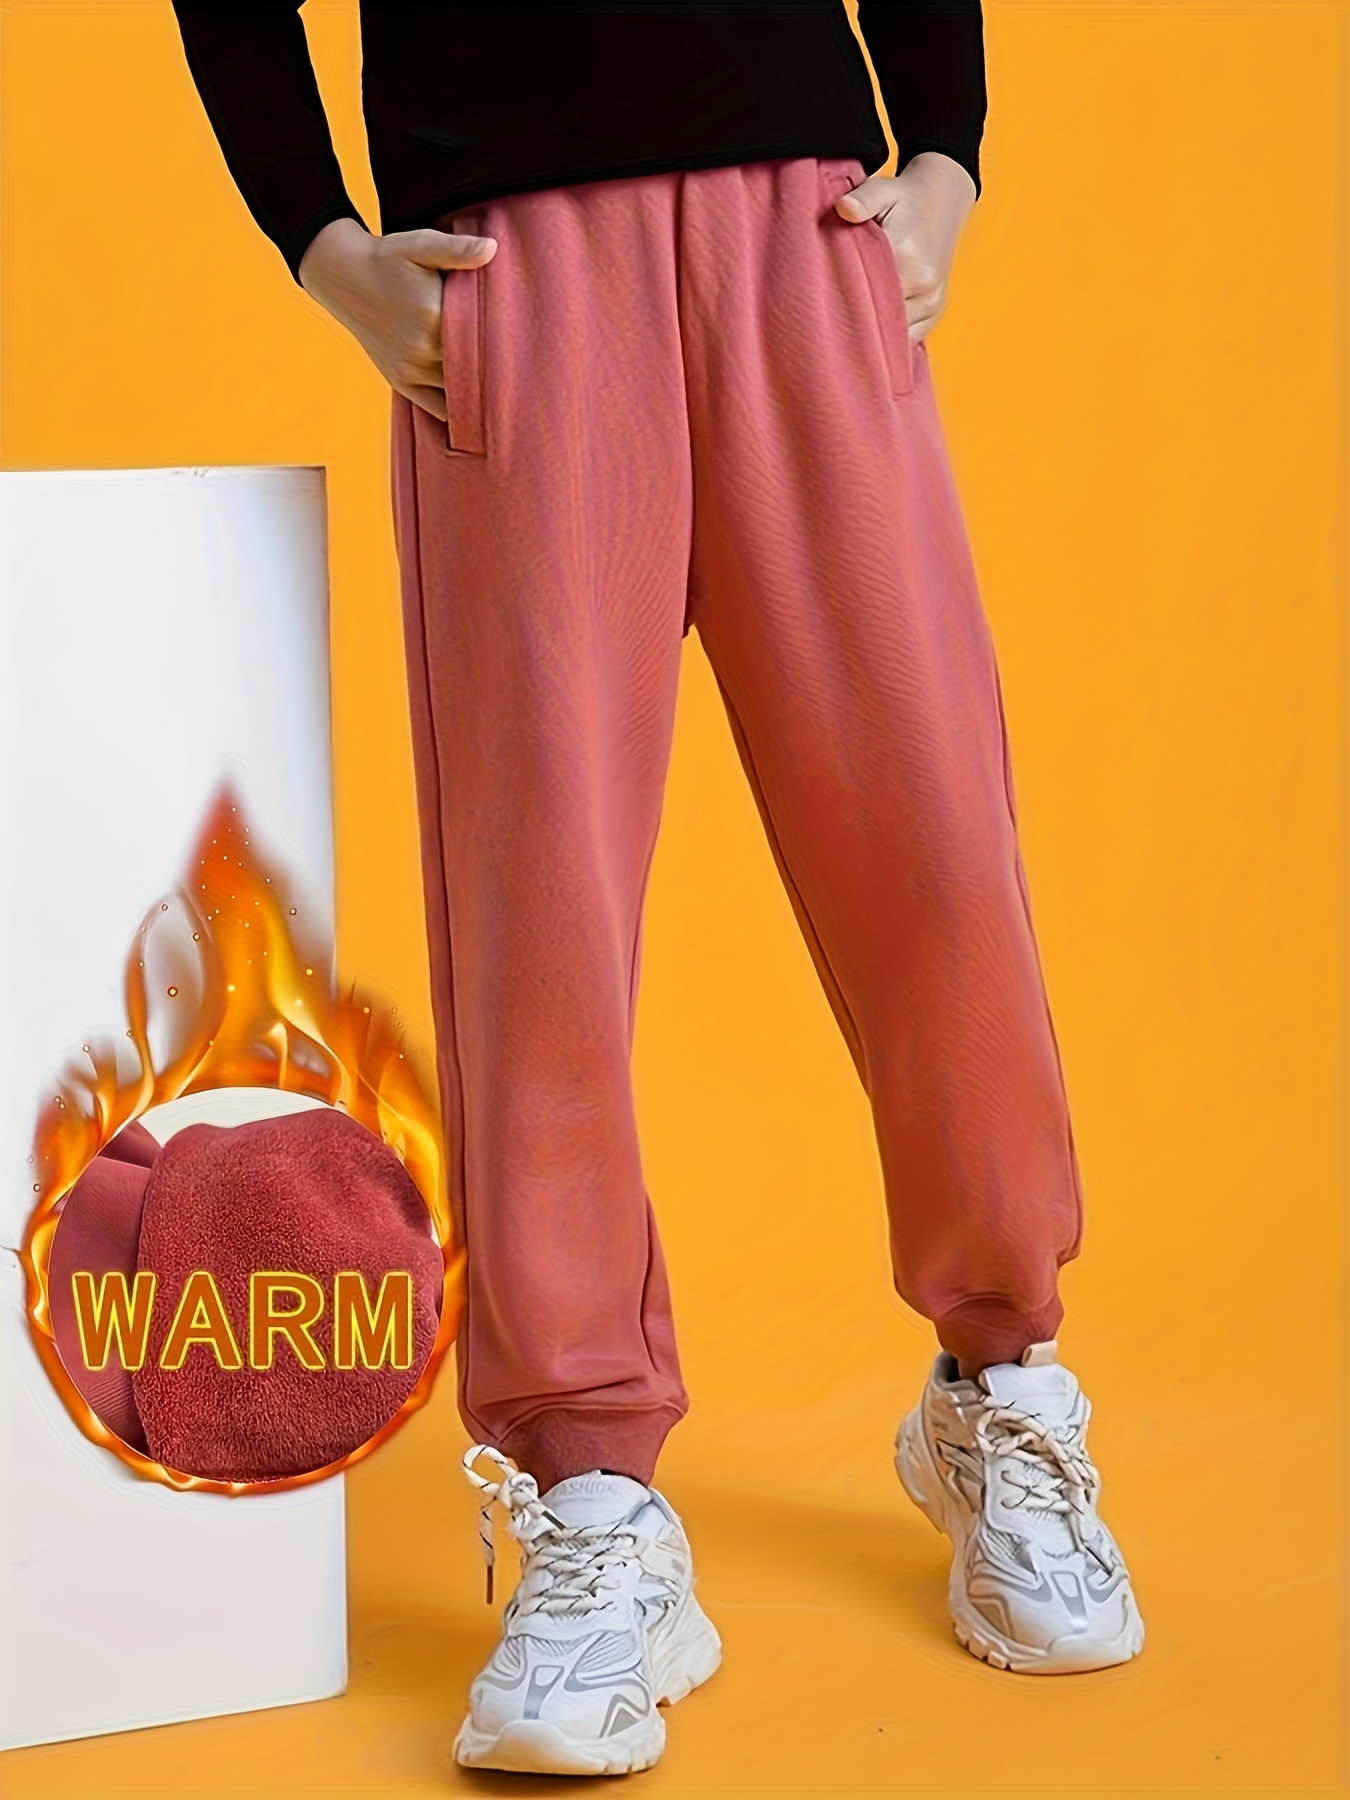 Pantalones de chándal de forro polar básico - Naranja